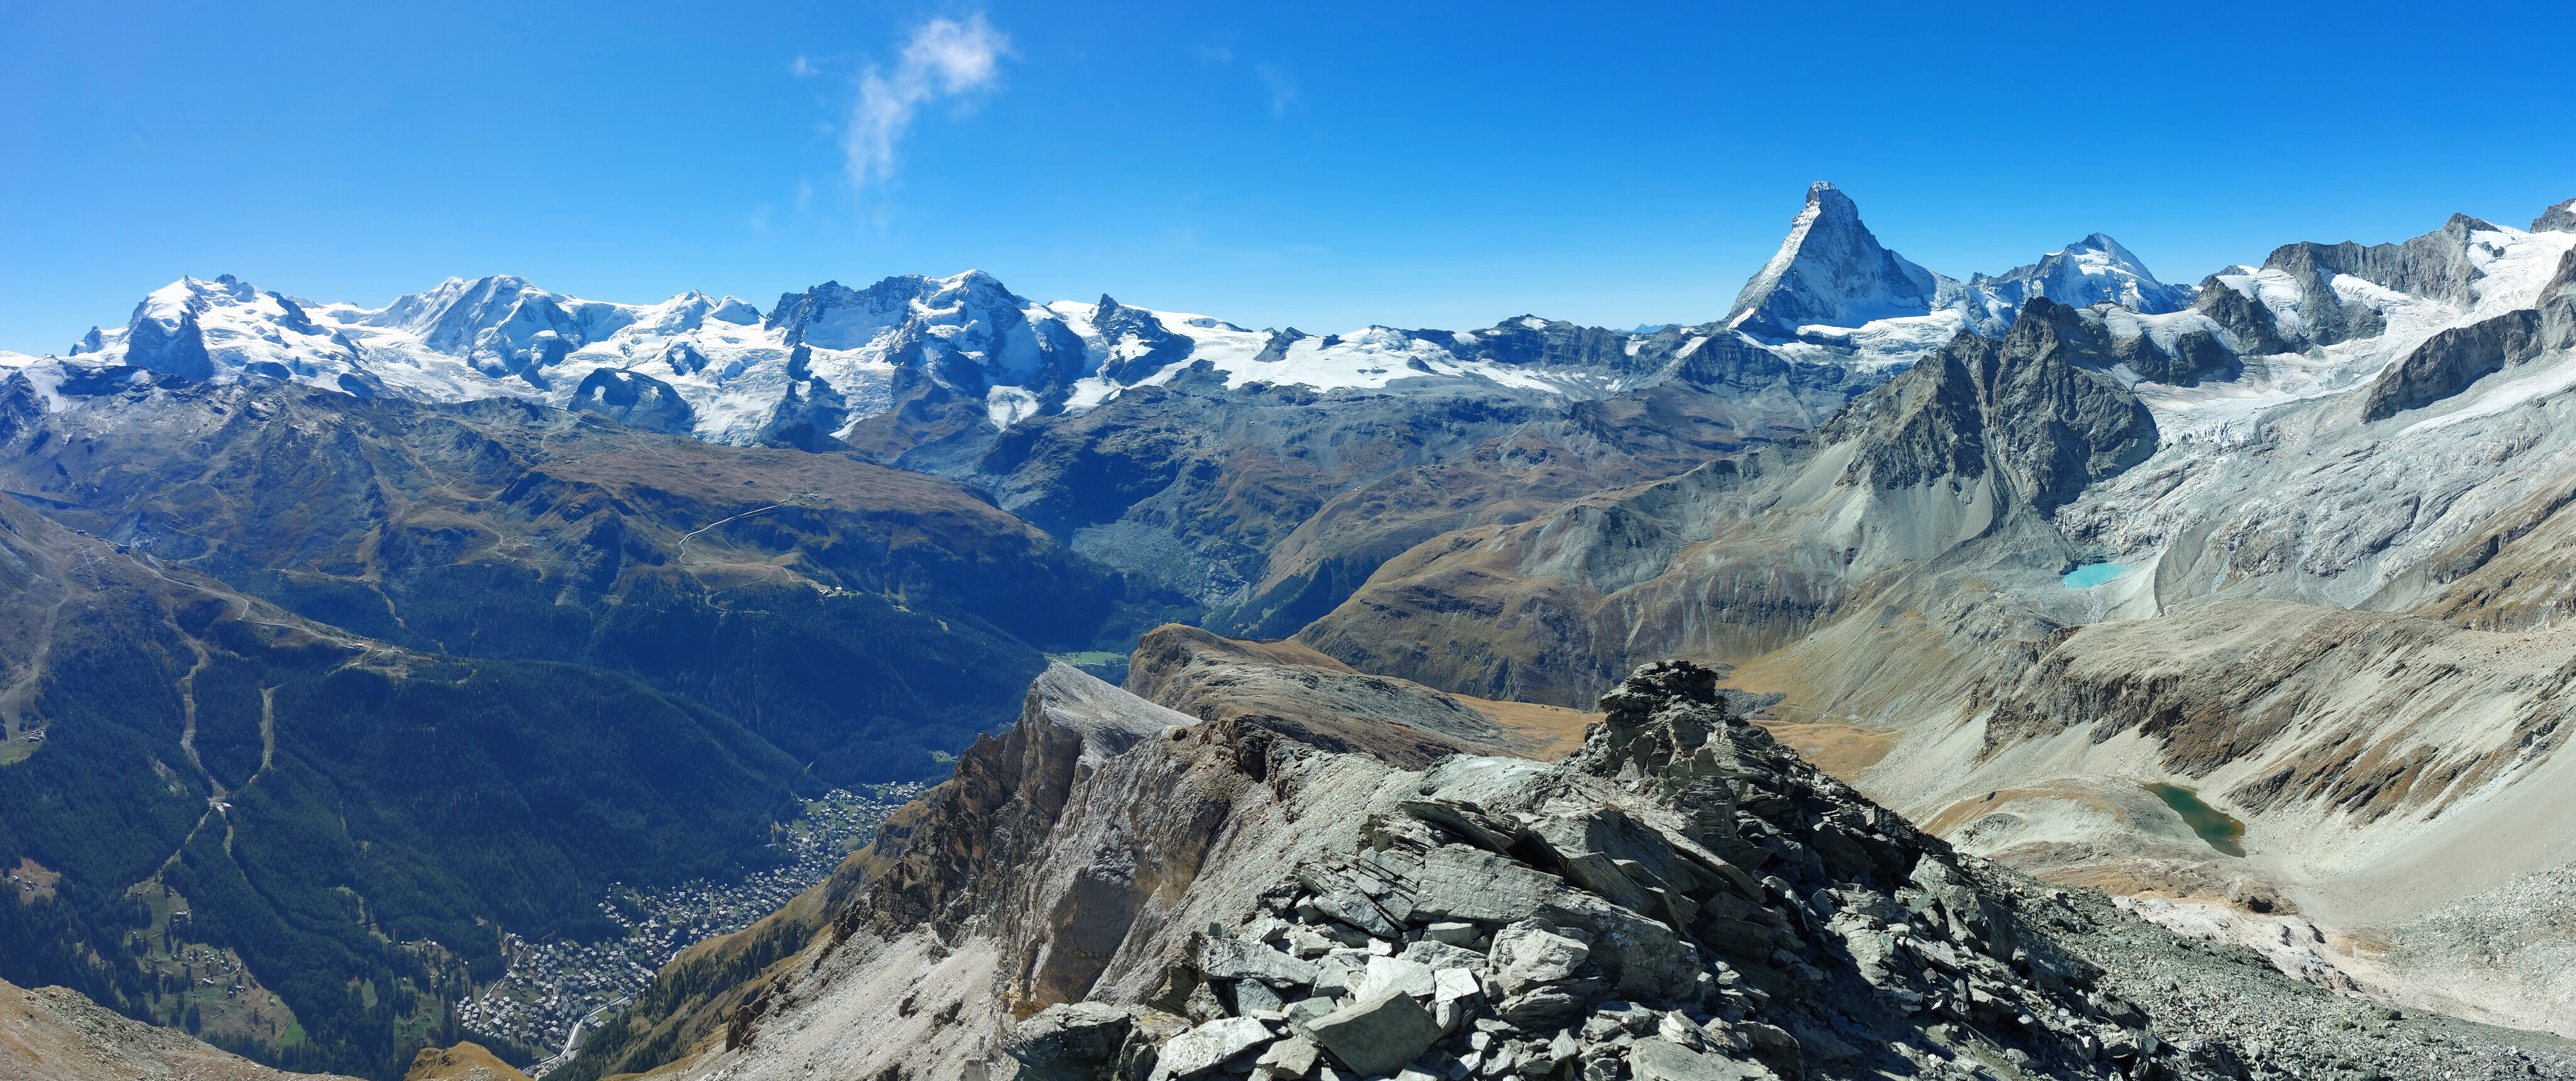 Summit view of Platthorn, Zermatt, Matterhorn, and Monte Rosa all visible